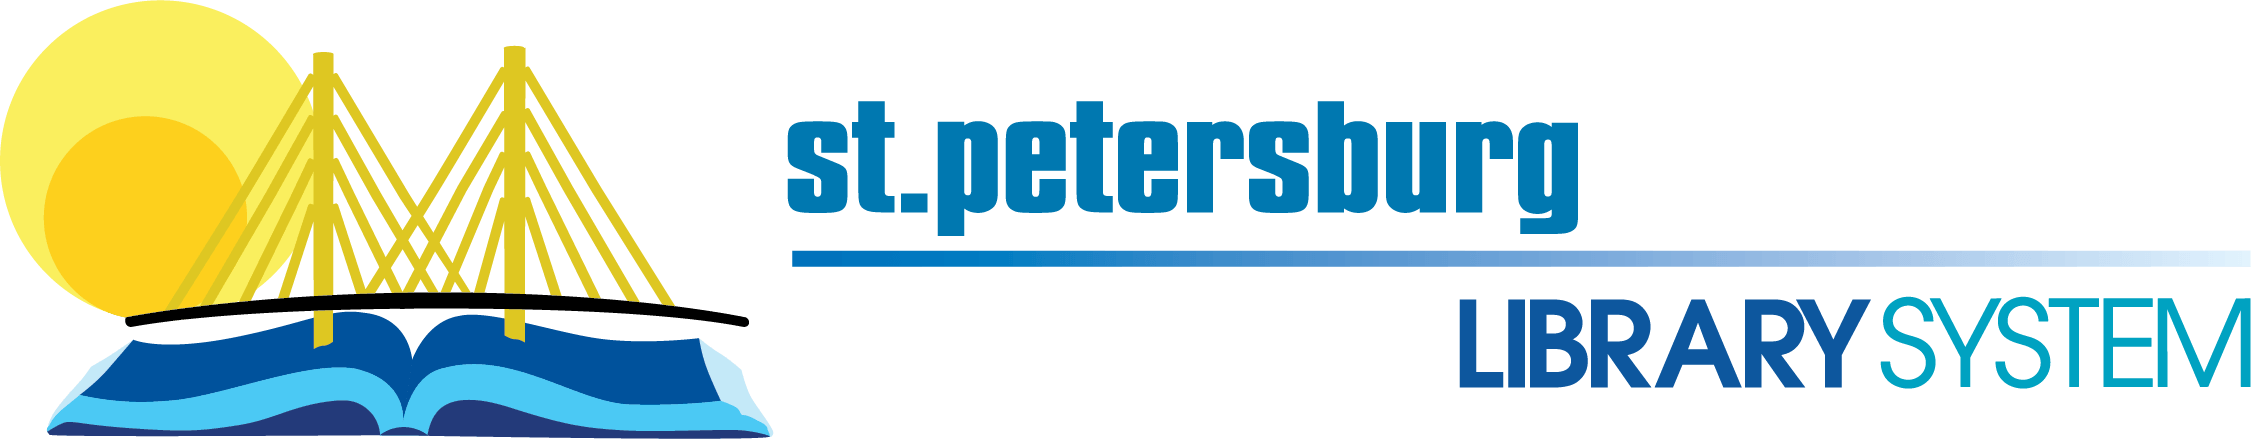 St. Petersburg Logo - St. Petersburg Library System